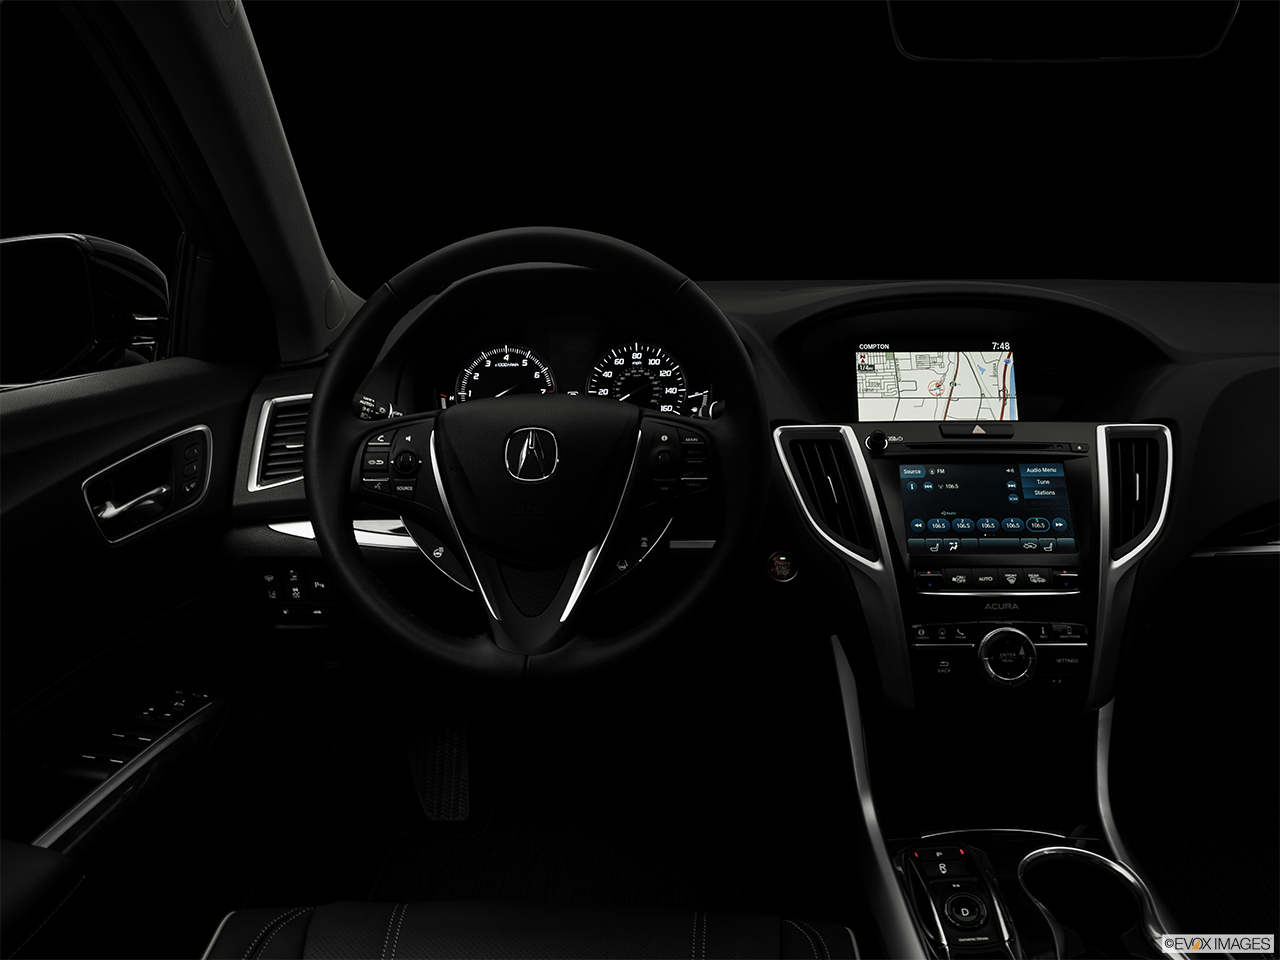 2018 Acura TLX 3.5L Centered wide dash shot - "night" shot. 